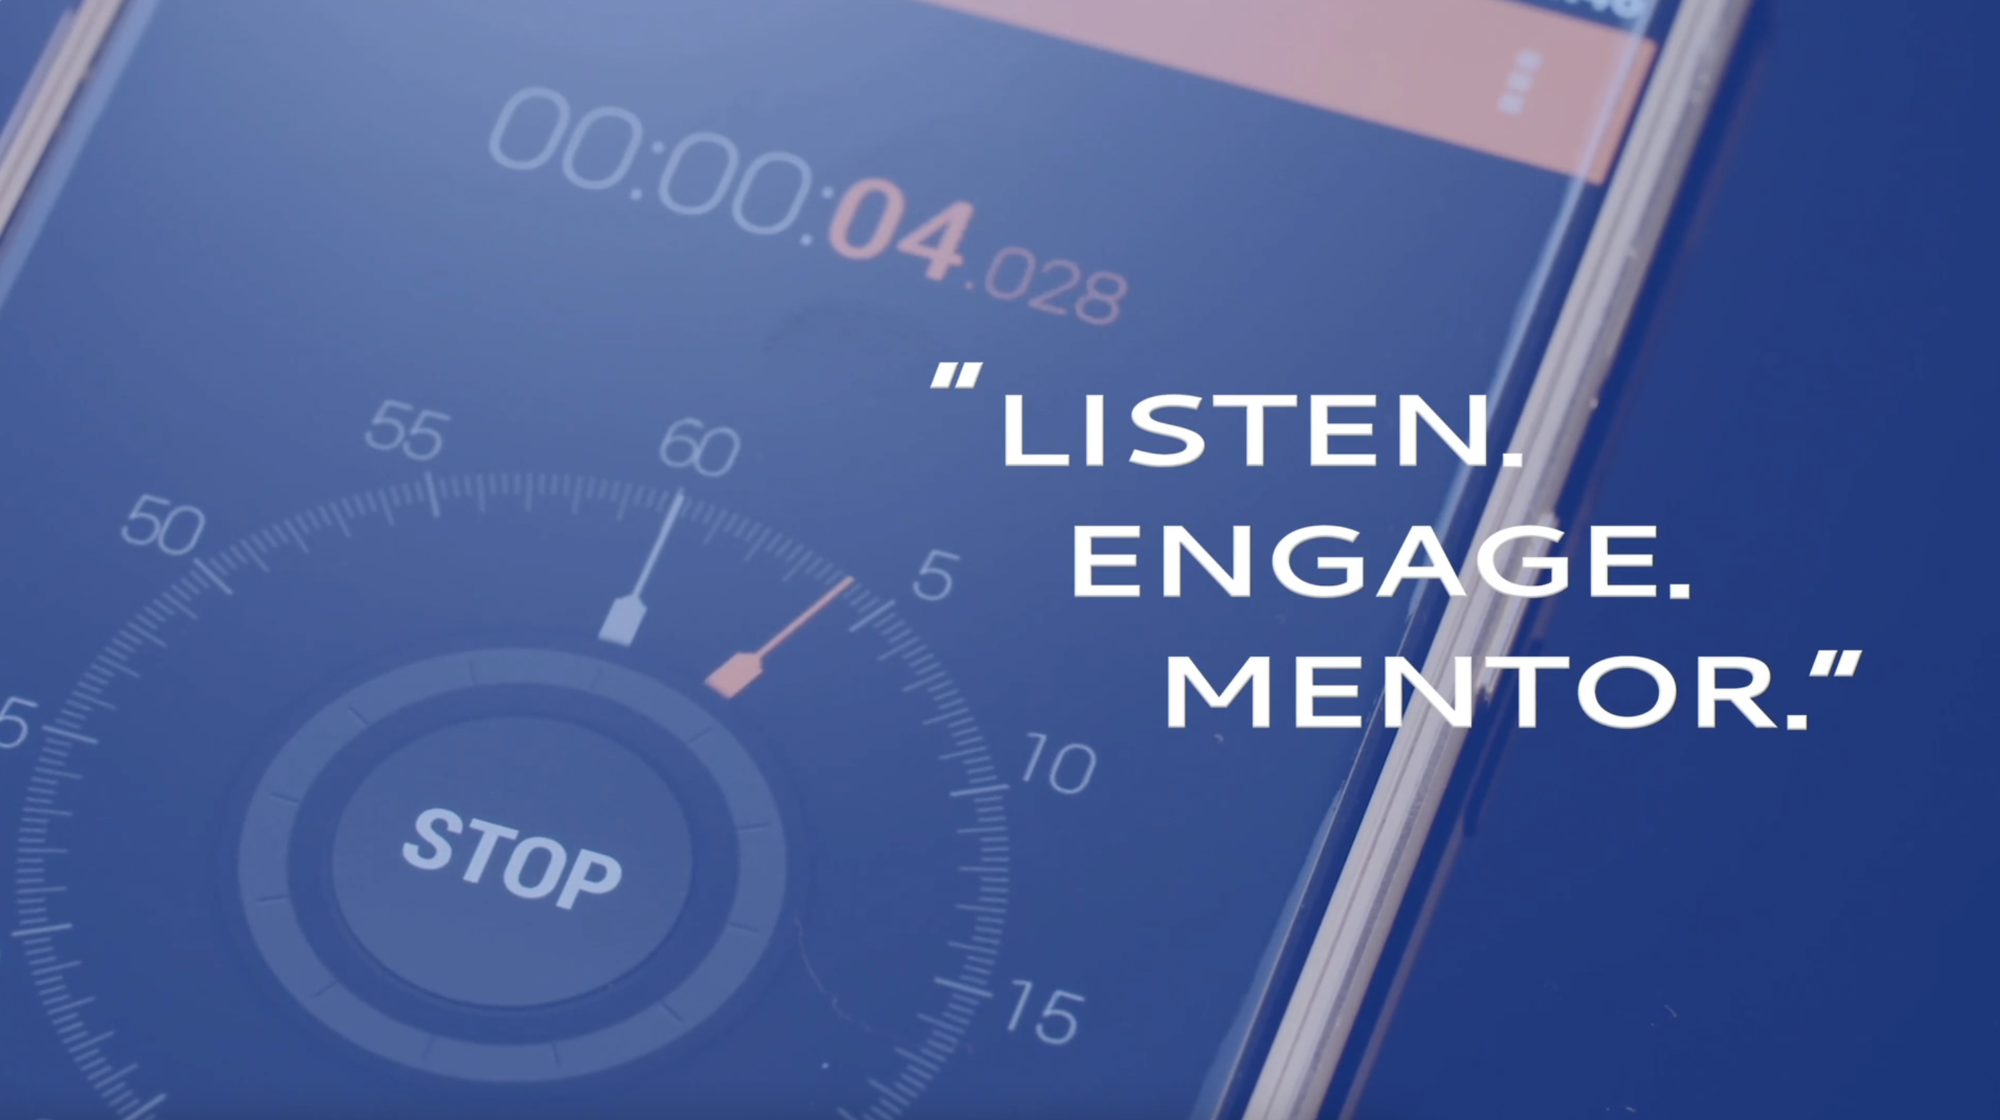 Listen. Engage. Mentor.